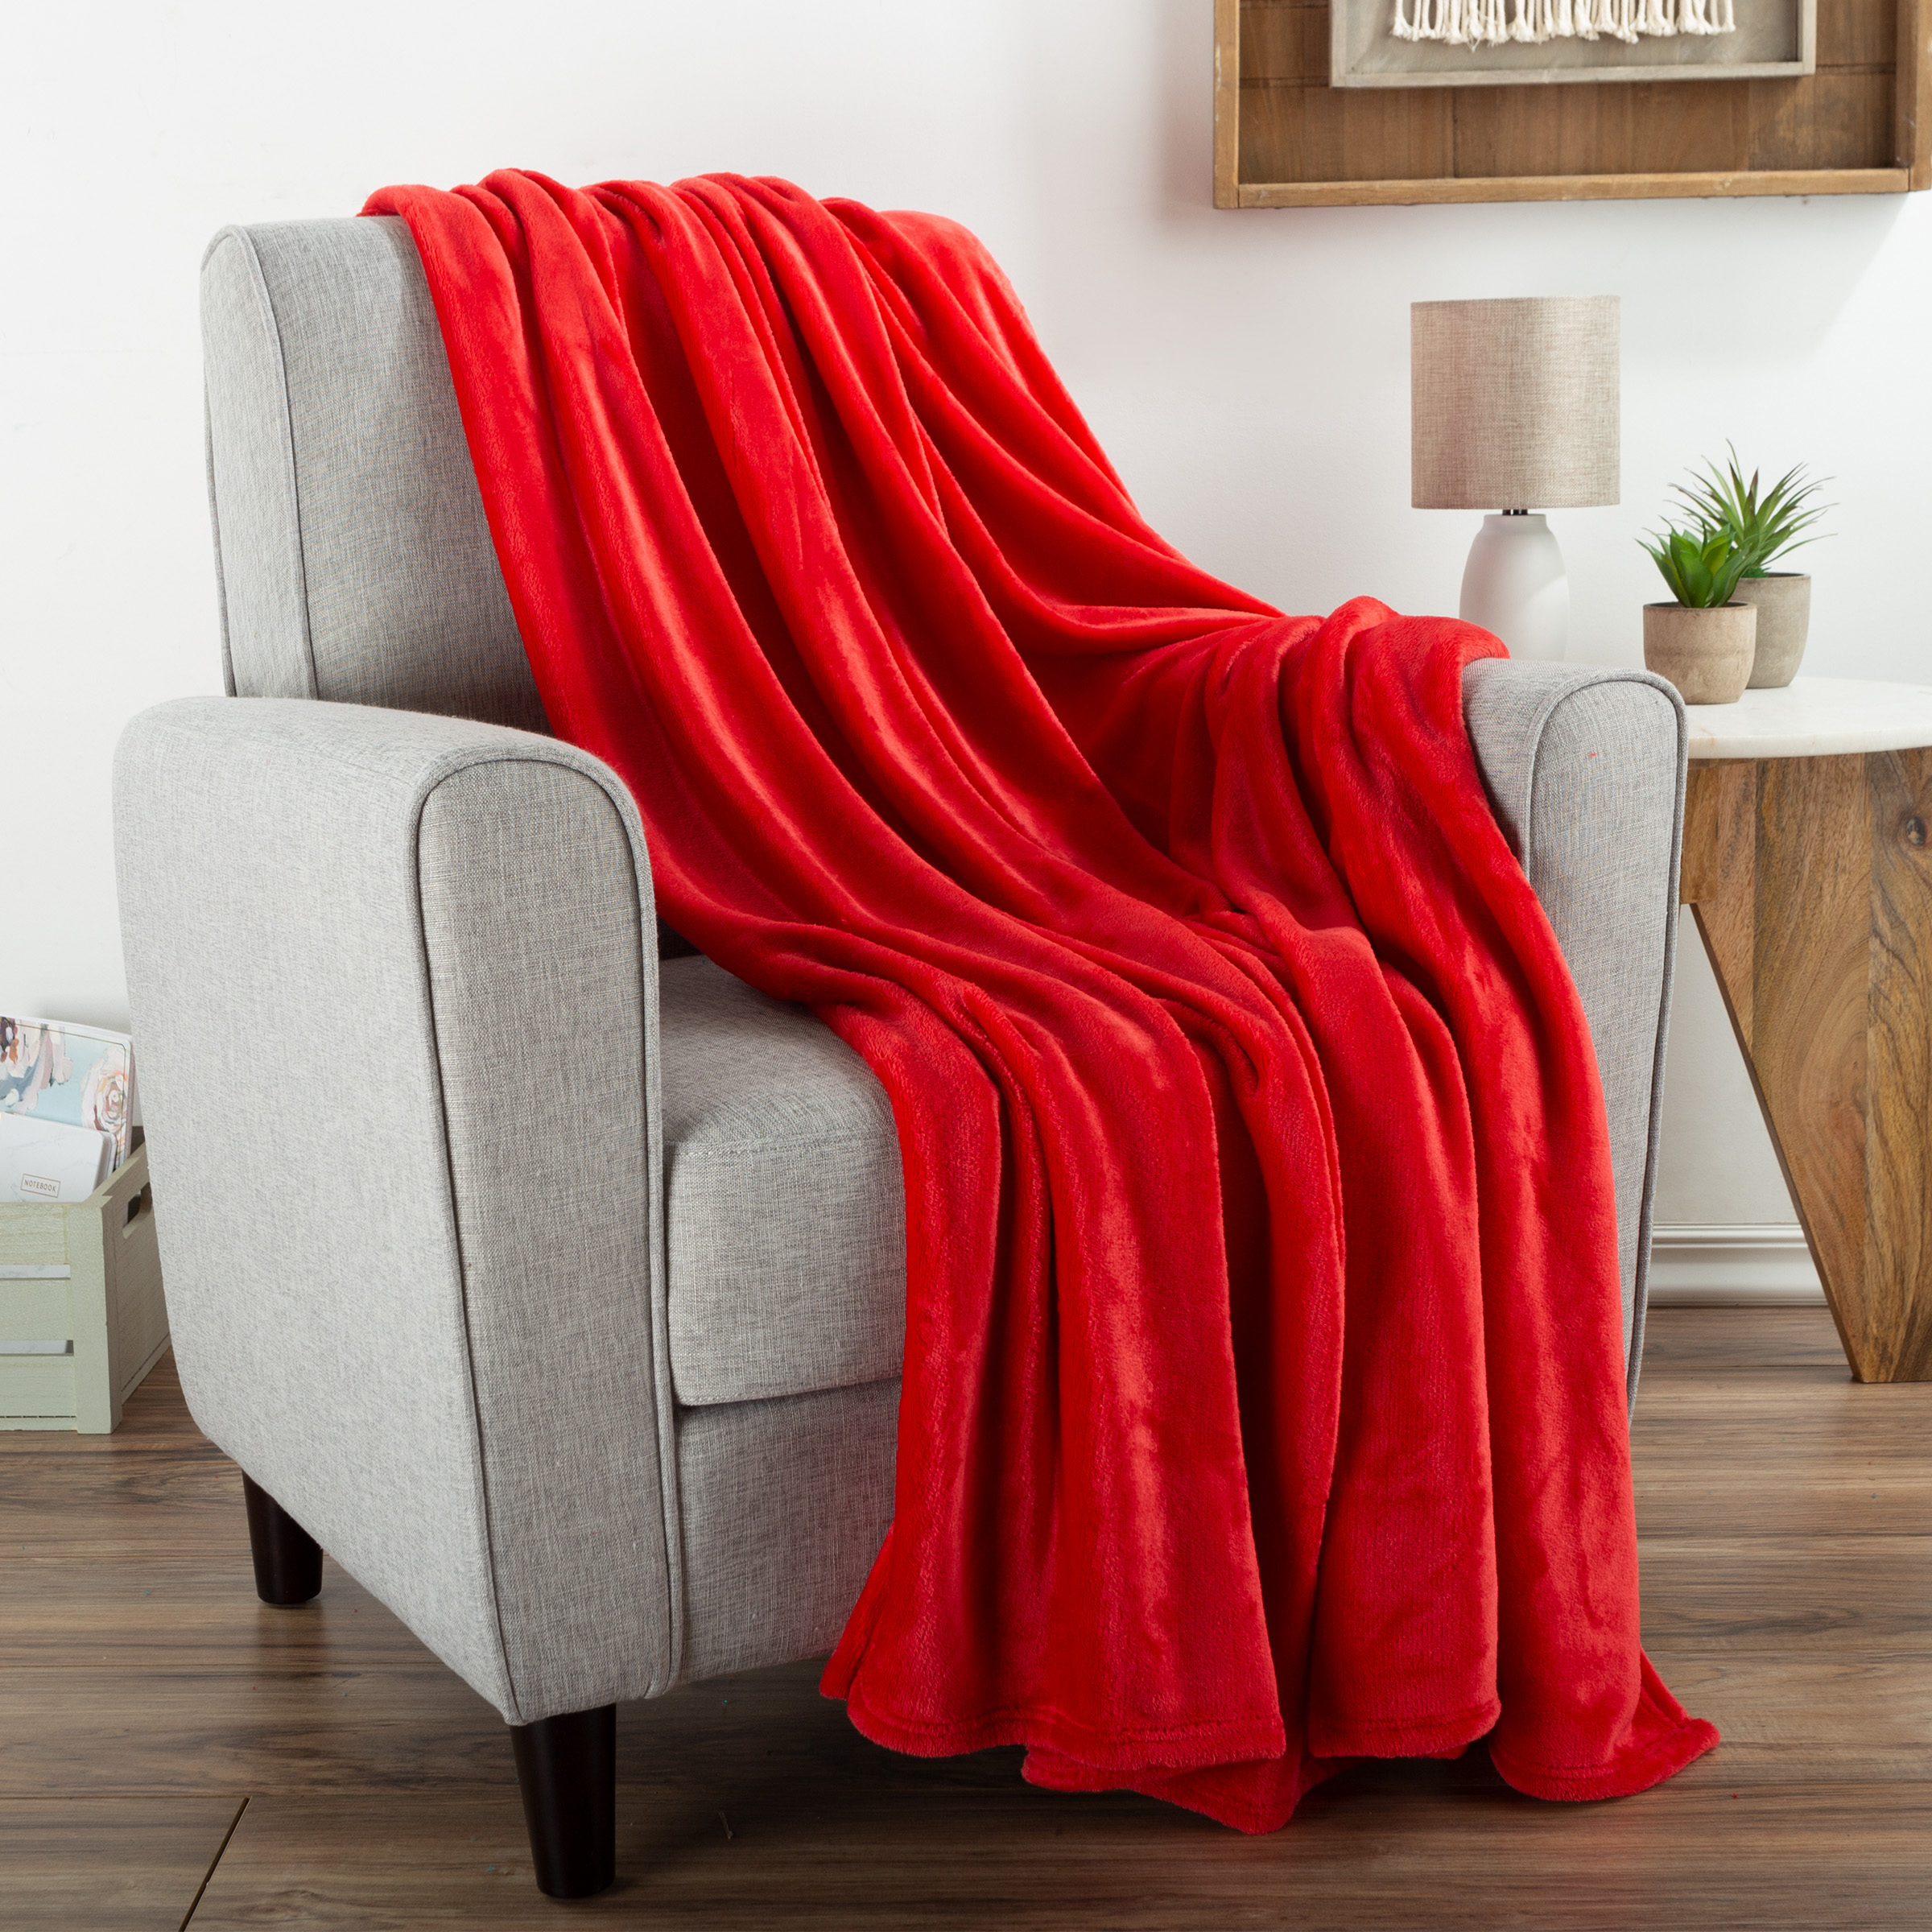 Fleece Throw Blanket- For Couch, Home Décor, Sofa & Chair- Oversized 60” X 70”- Lightweight, Soft & Plush Microfiber - Crimson Red